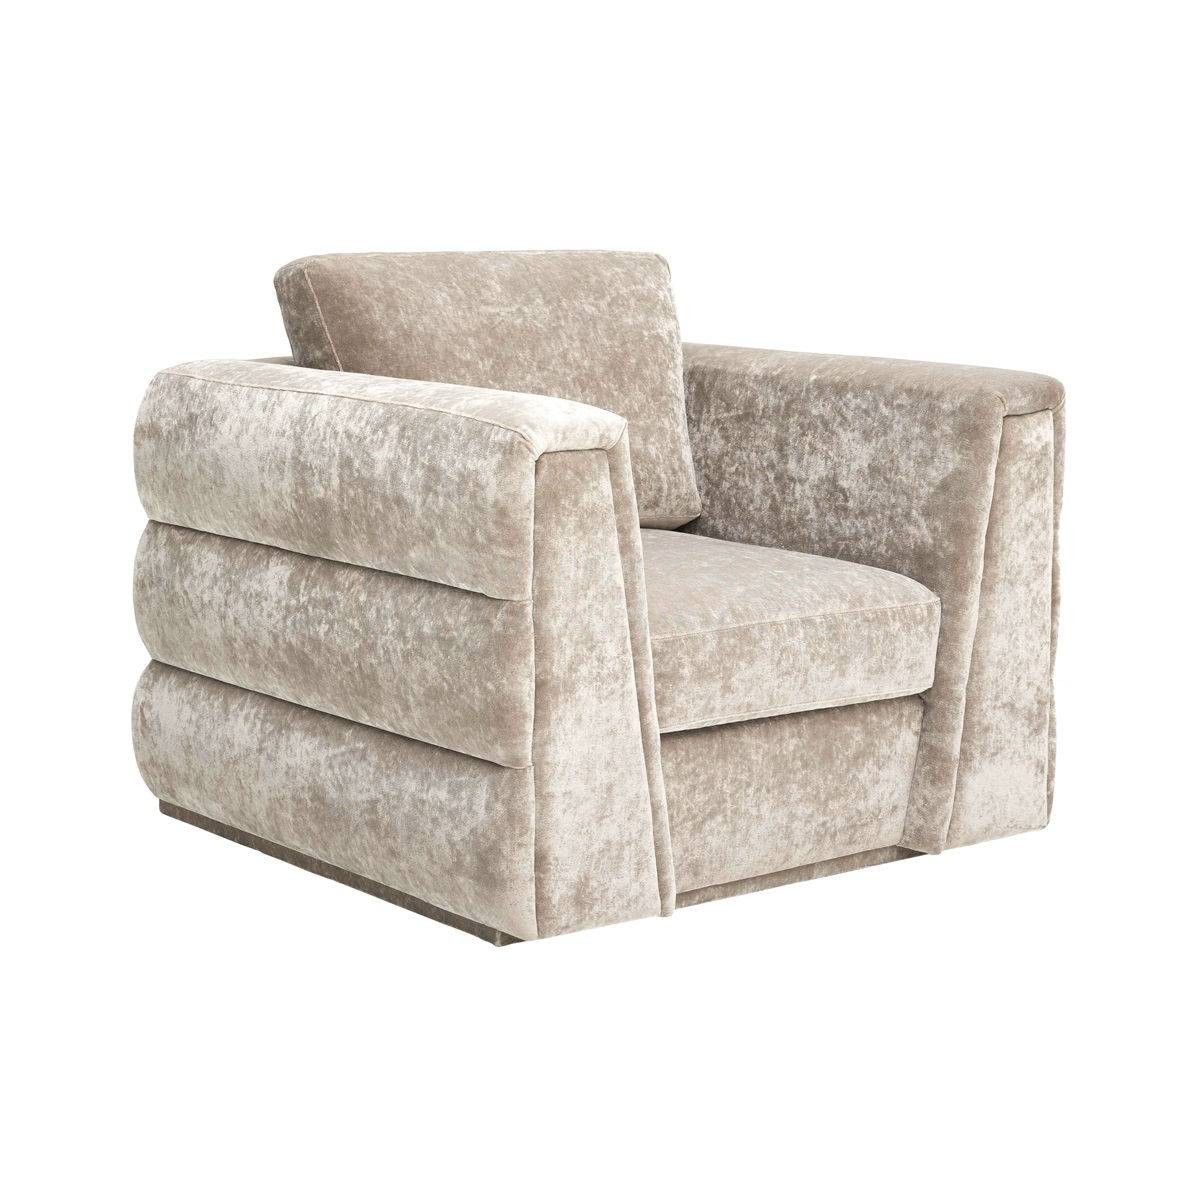 Кресло Cloe armchair из Великобритании фабрики THE SOFA & CHAIR Company